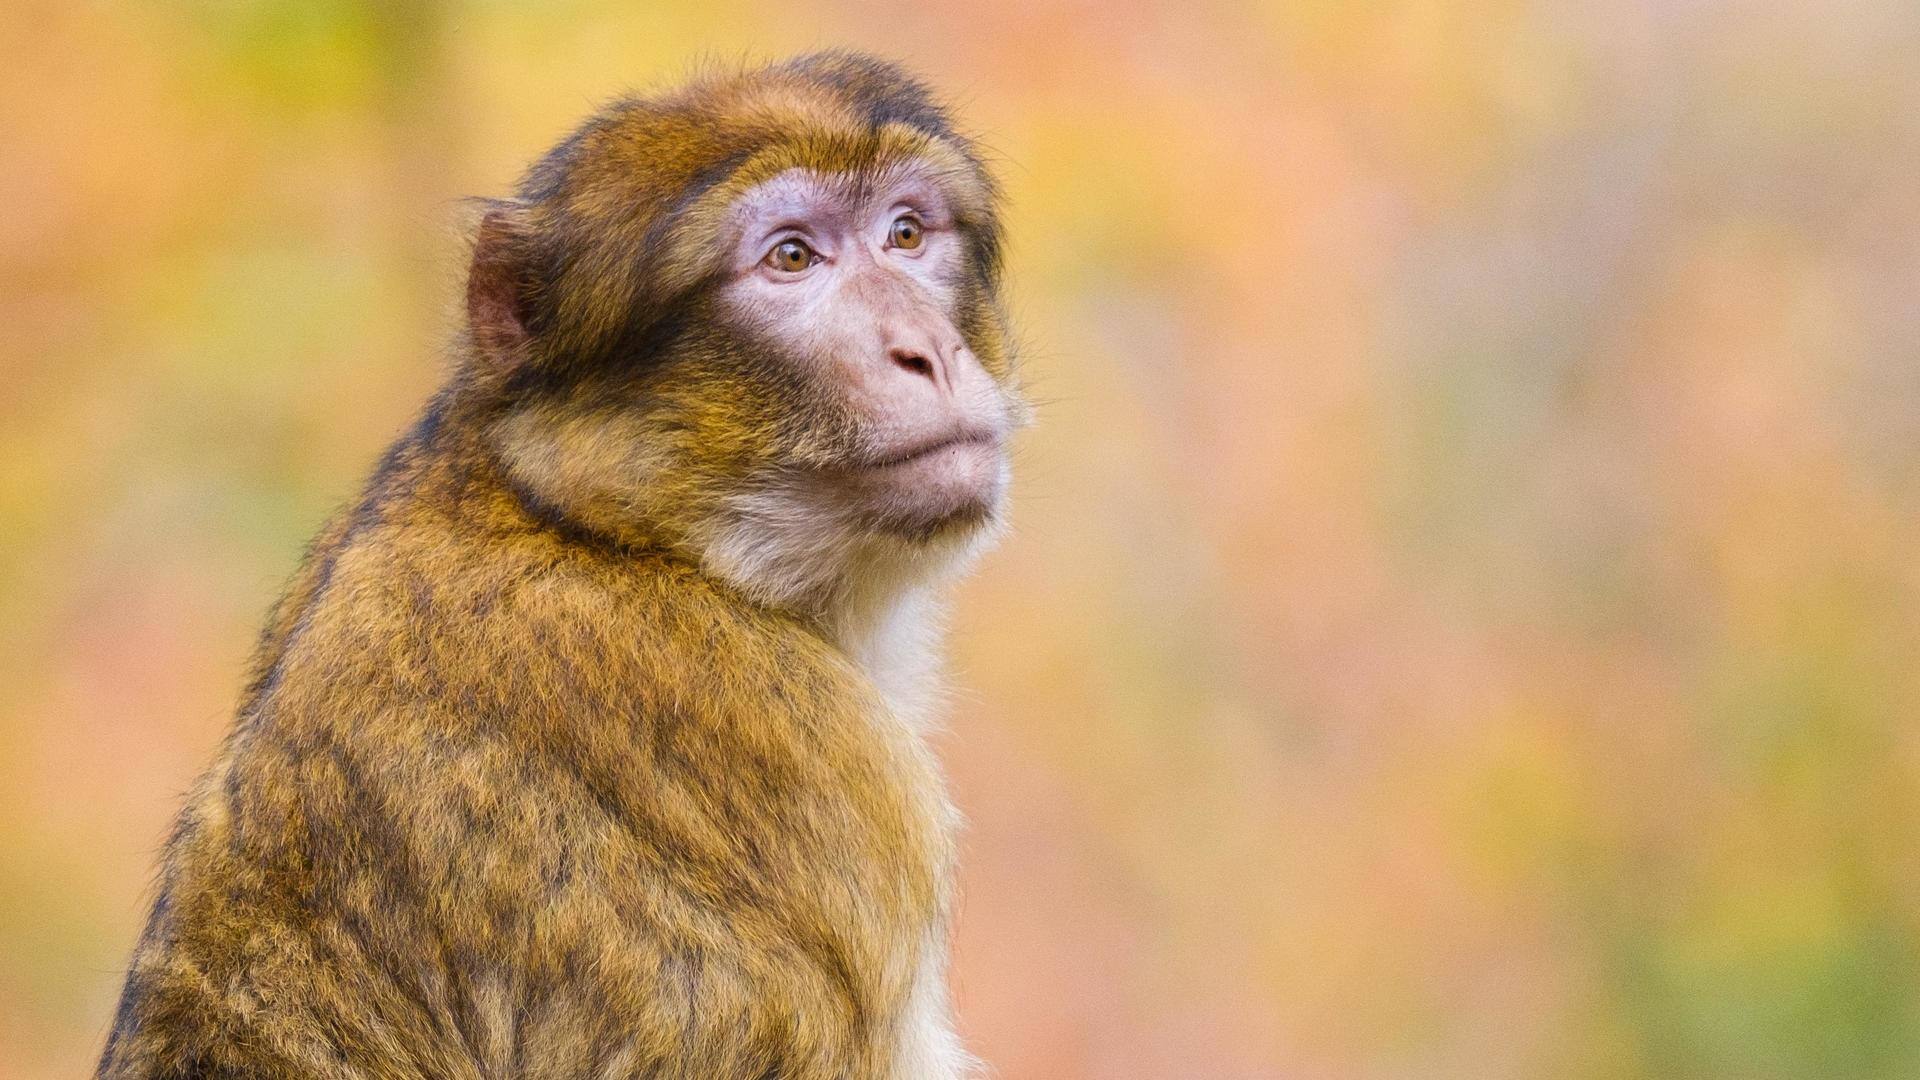 Anti-aging protein injection enhance monkeys' memory: Study